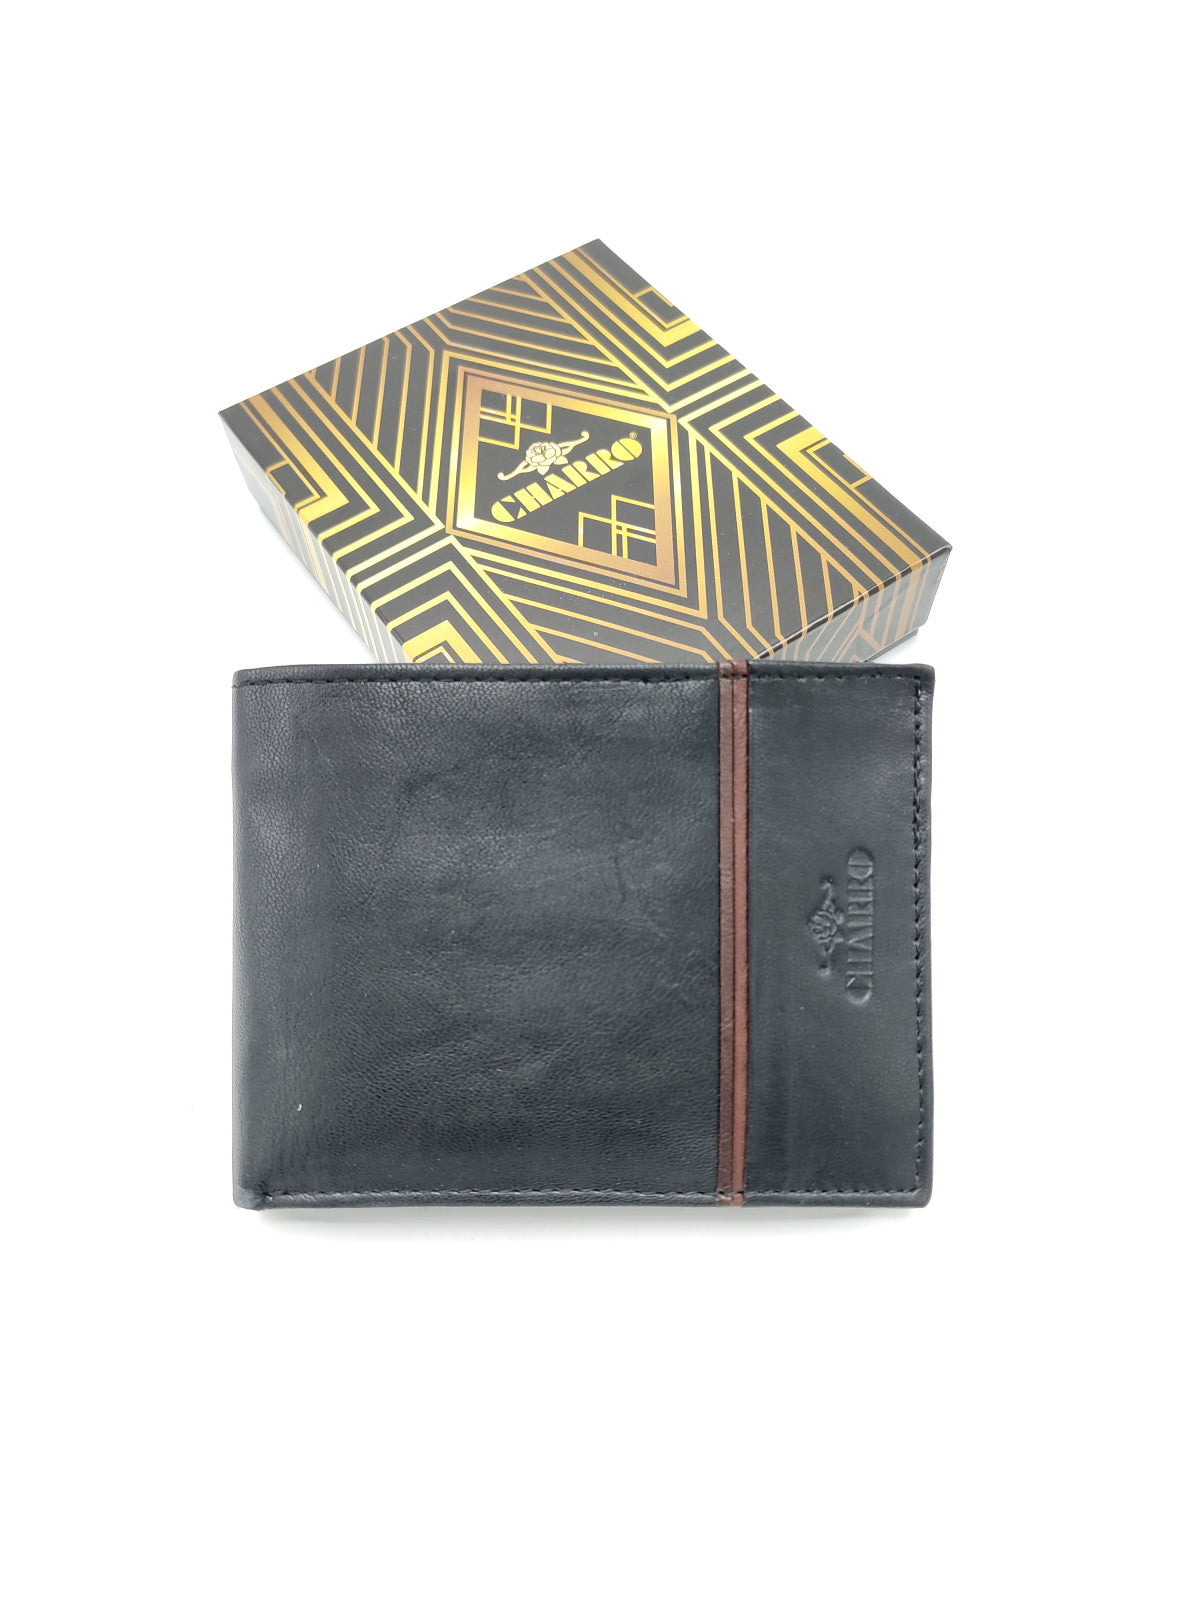 Genuine leather wallet for men, Brand Charro, art. ITTI1123.422